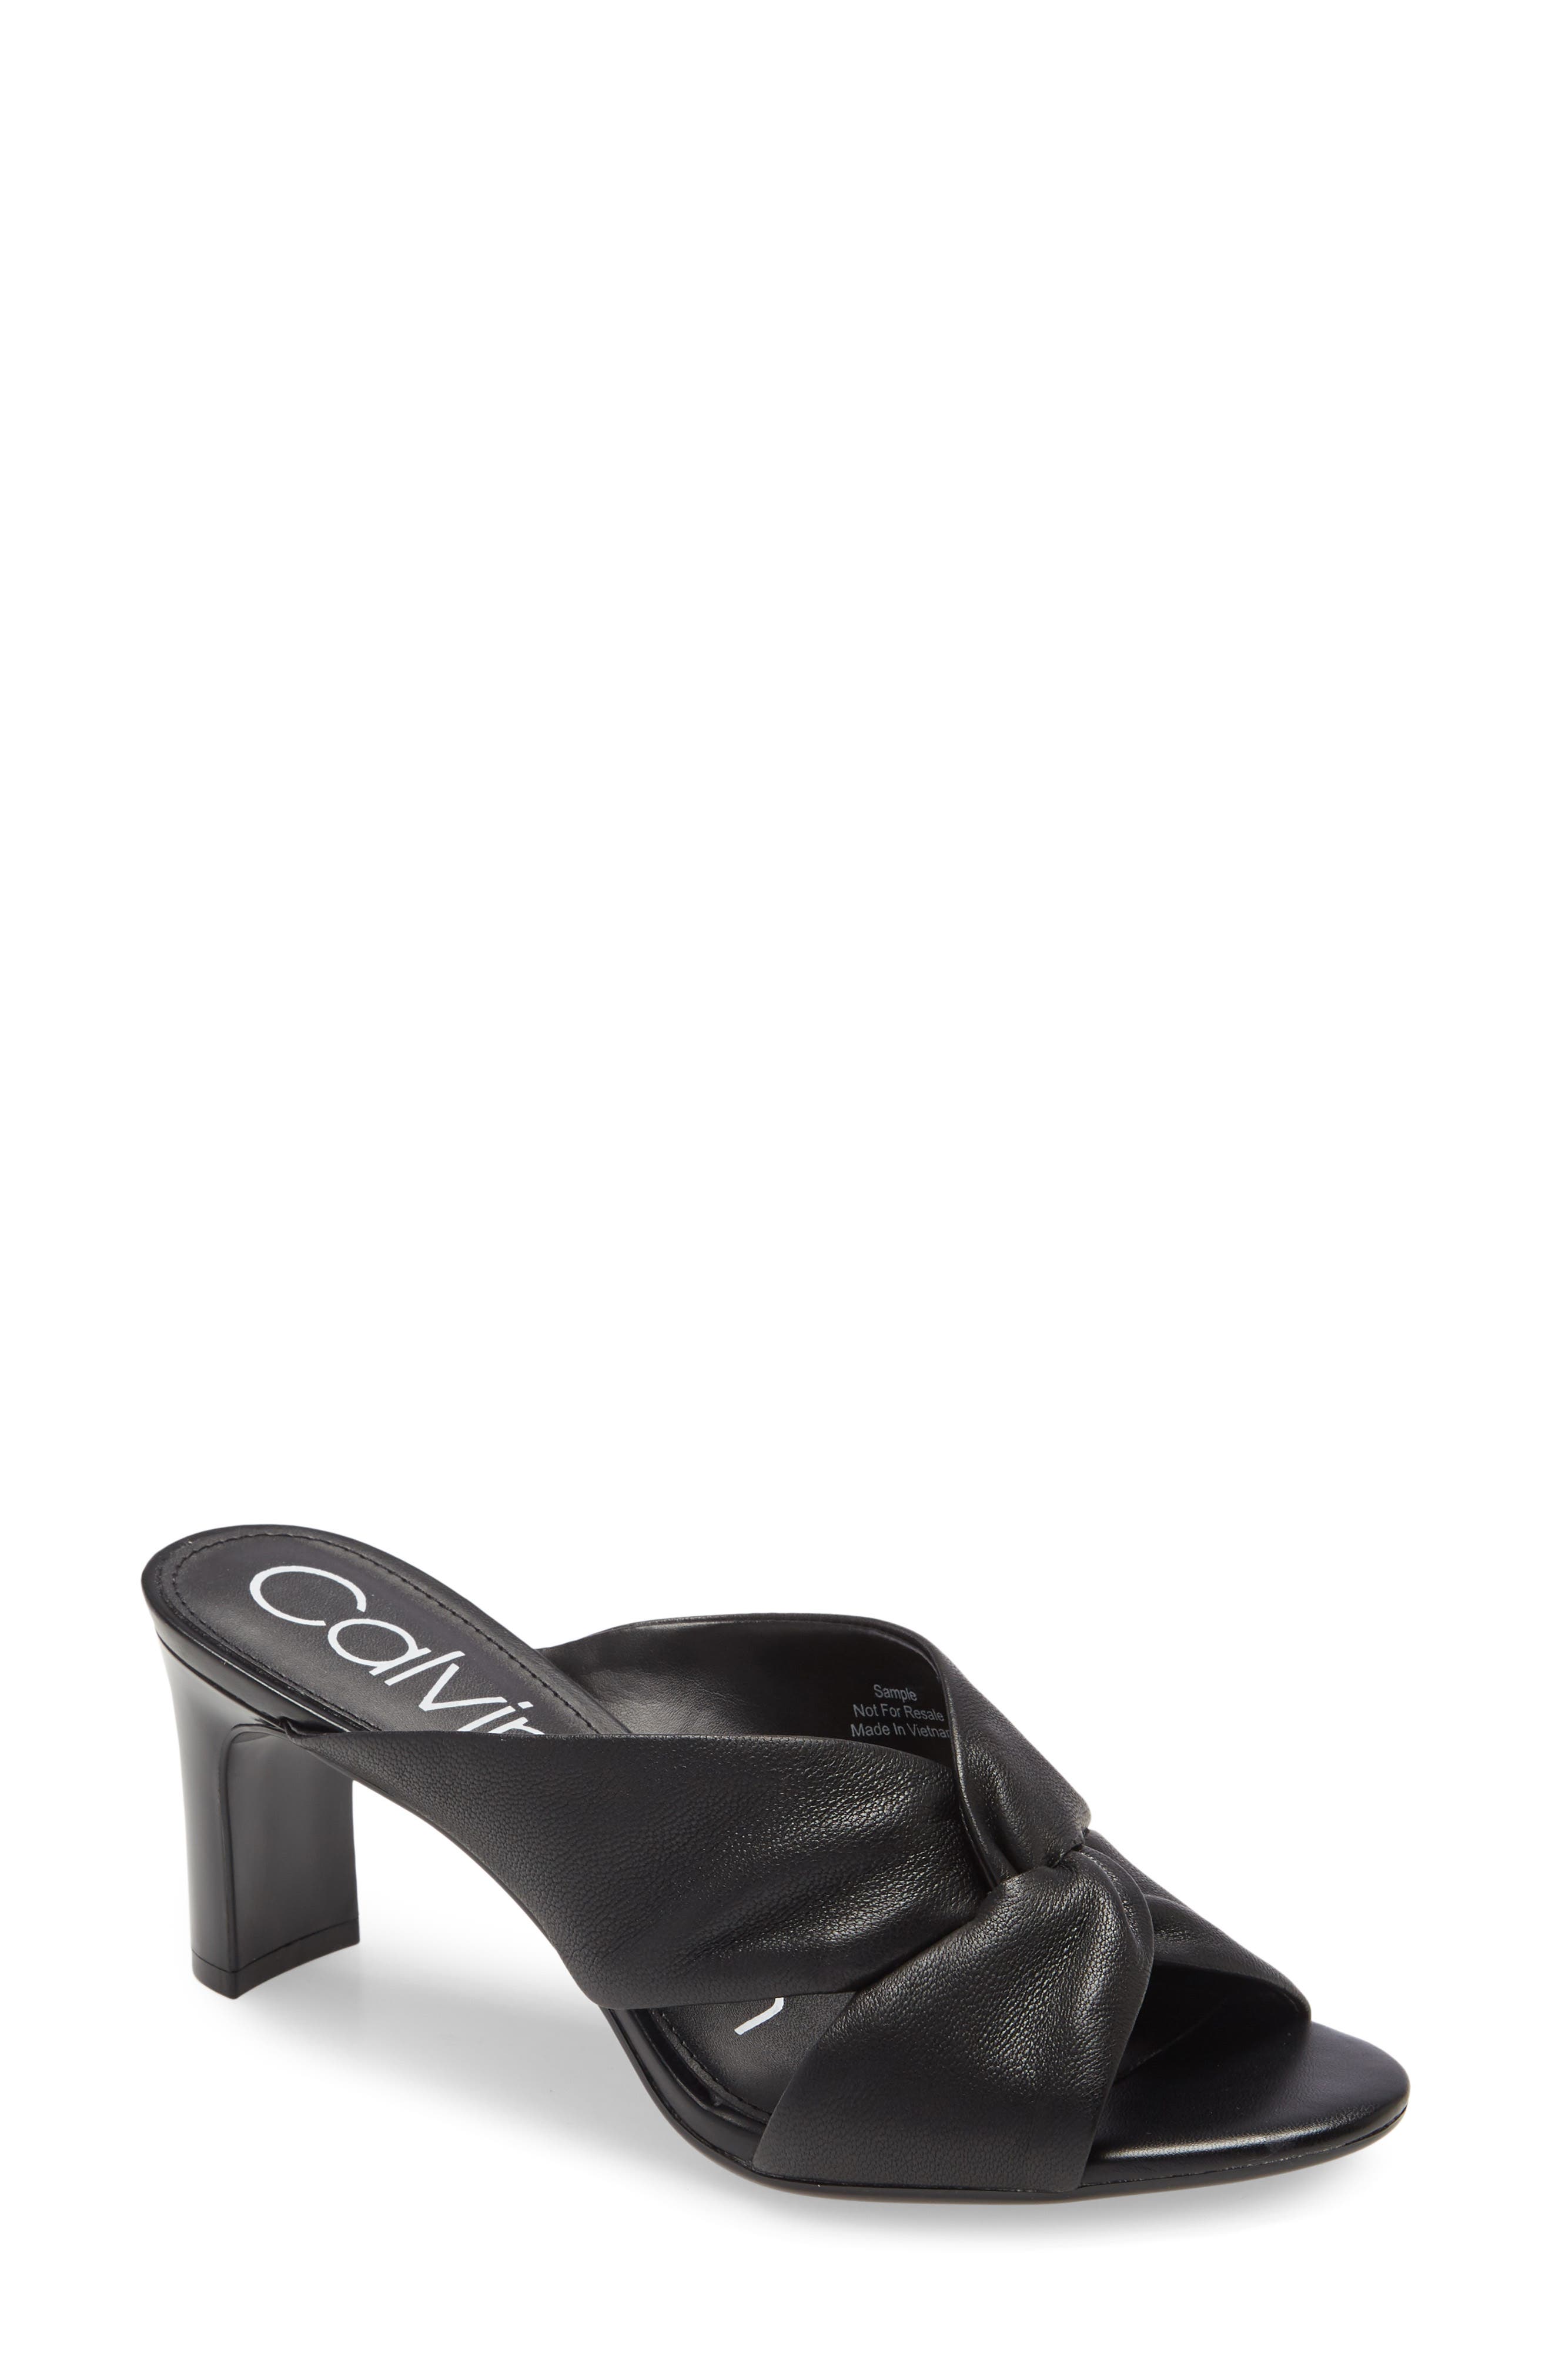 UPC 194060410500 product image for Women's Calvin Klein Omarion Sandal, Size 5 M - Black | upcitemdb.com